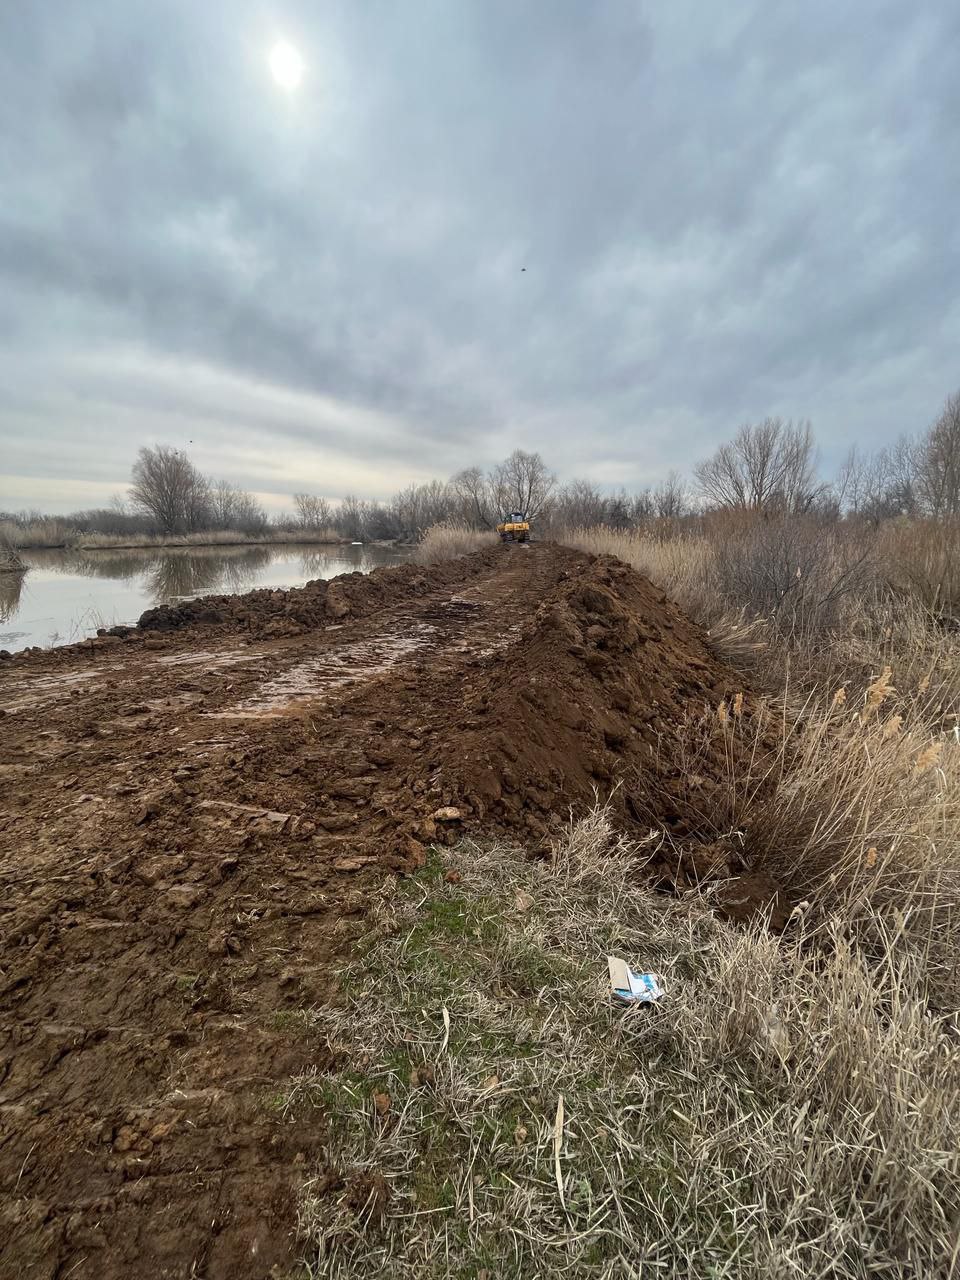 Последствия паводка устраняются на плотине у села Ивановка.